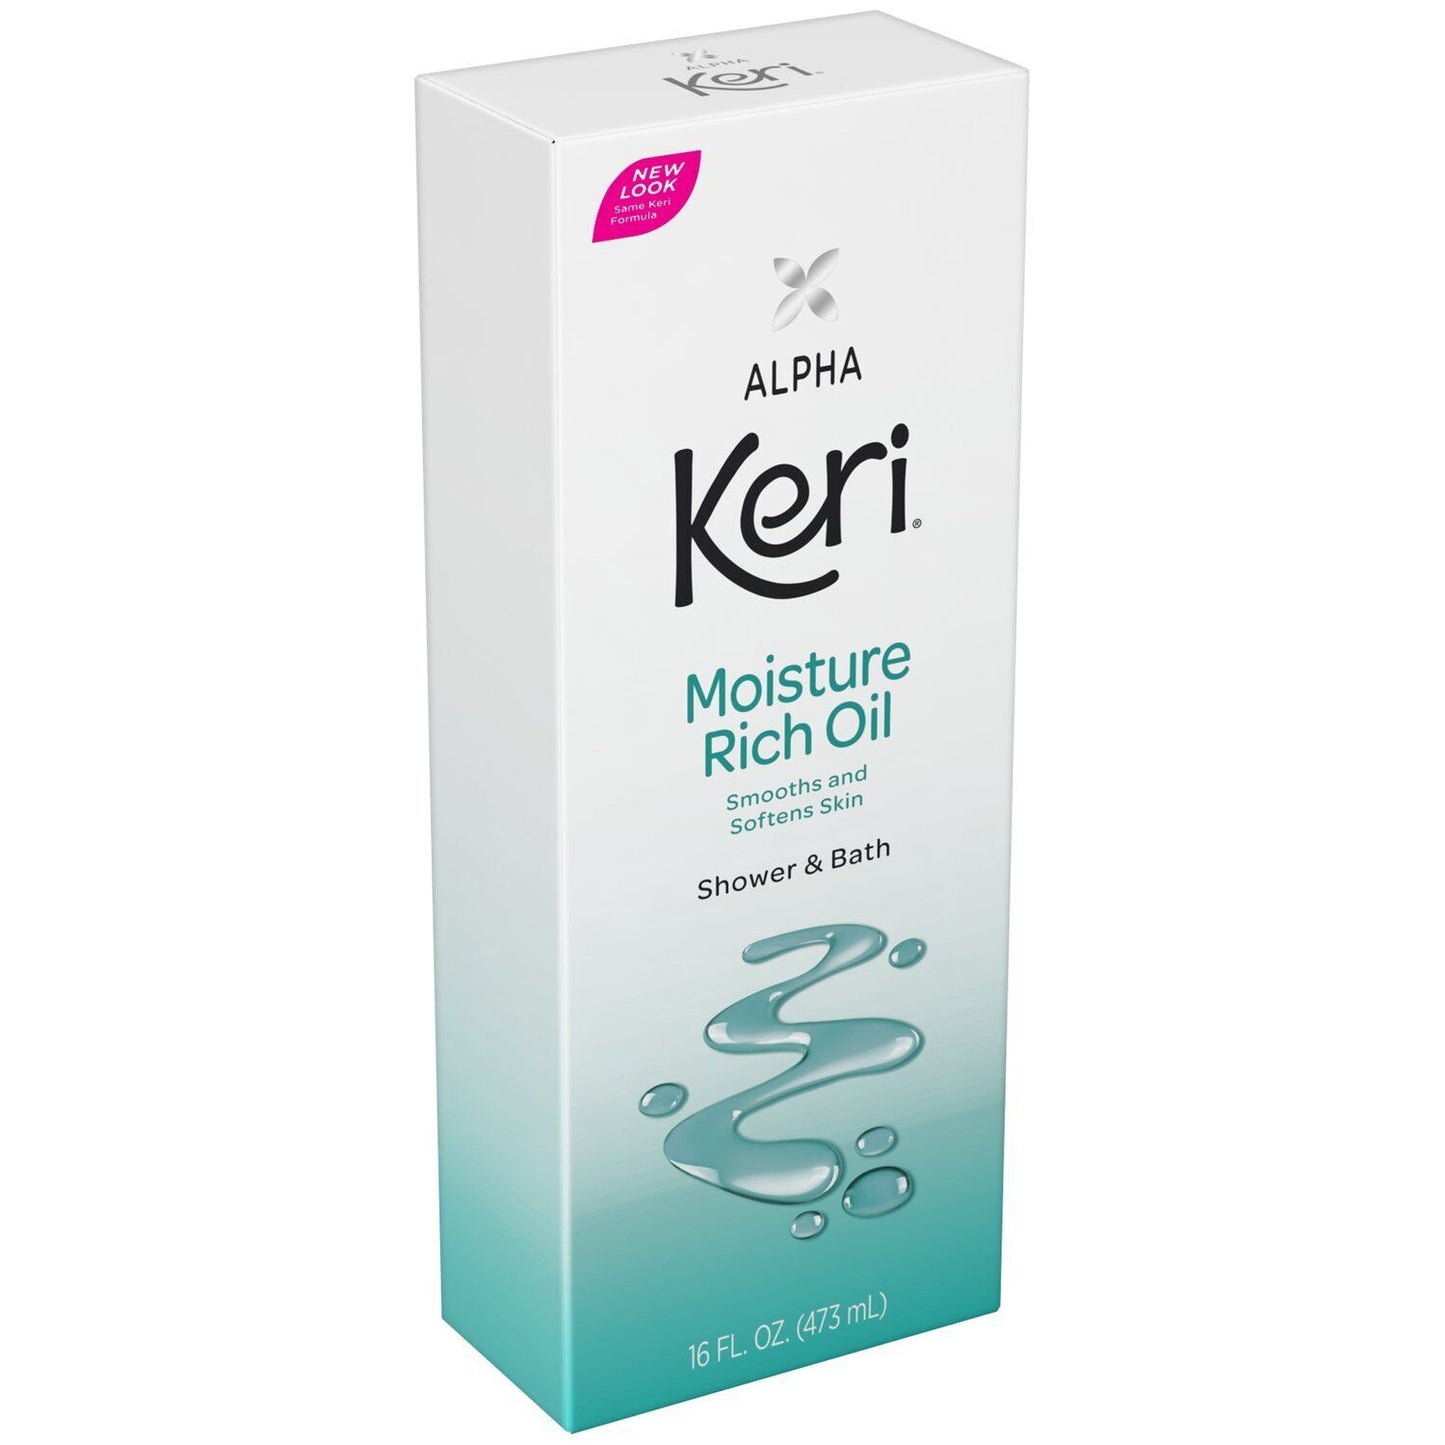 Alpha Keri Shower & Bath Moisture Rich Oil Smooth & Soften Replenish Skin 16oz